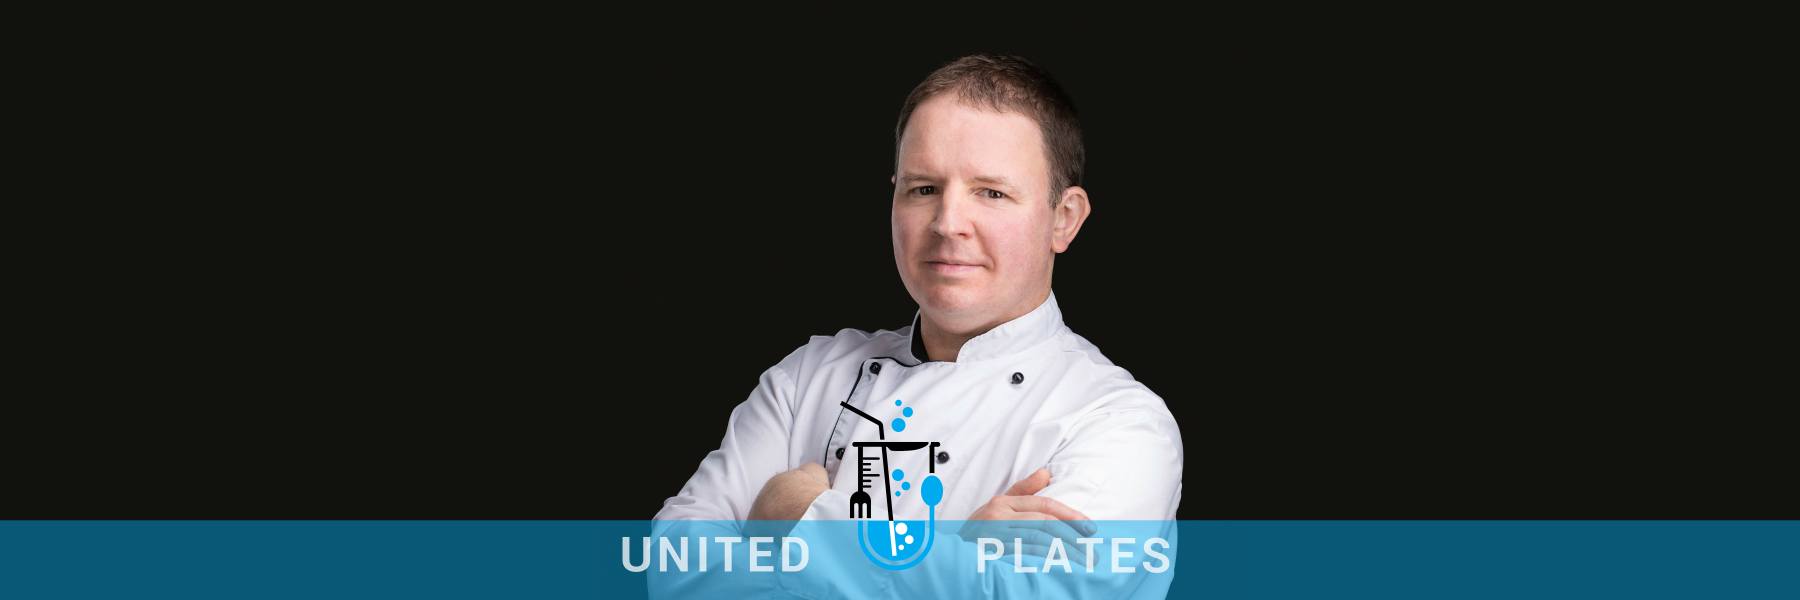 United Plates darren harris founder of united plates dublin